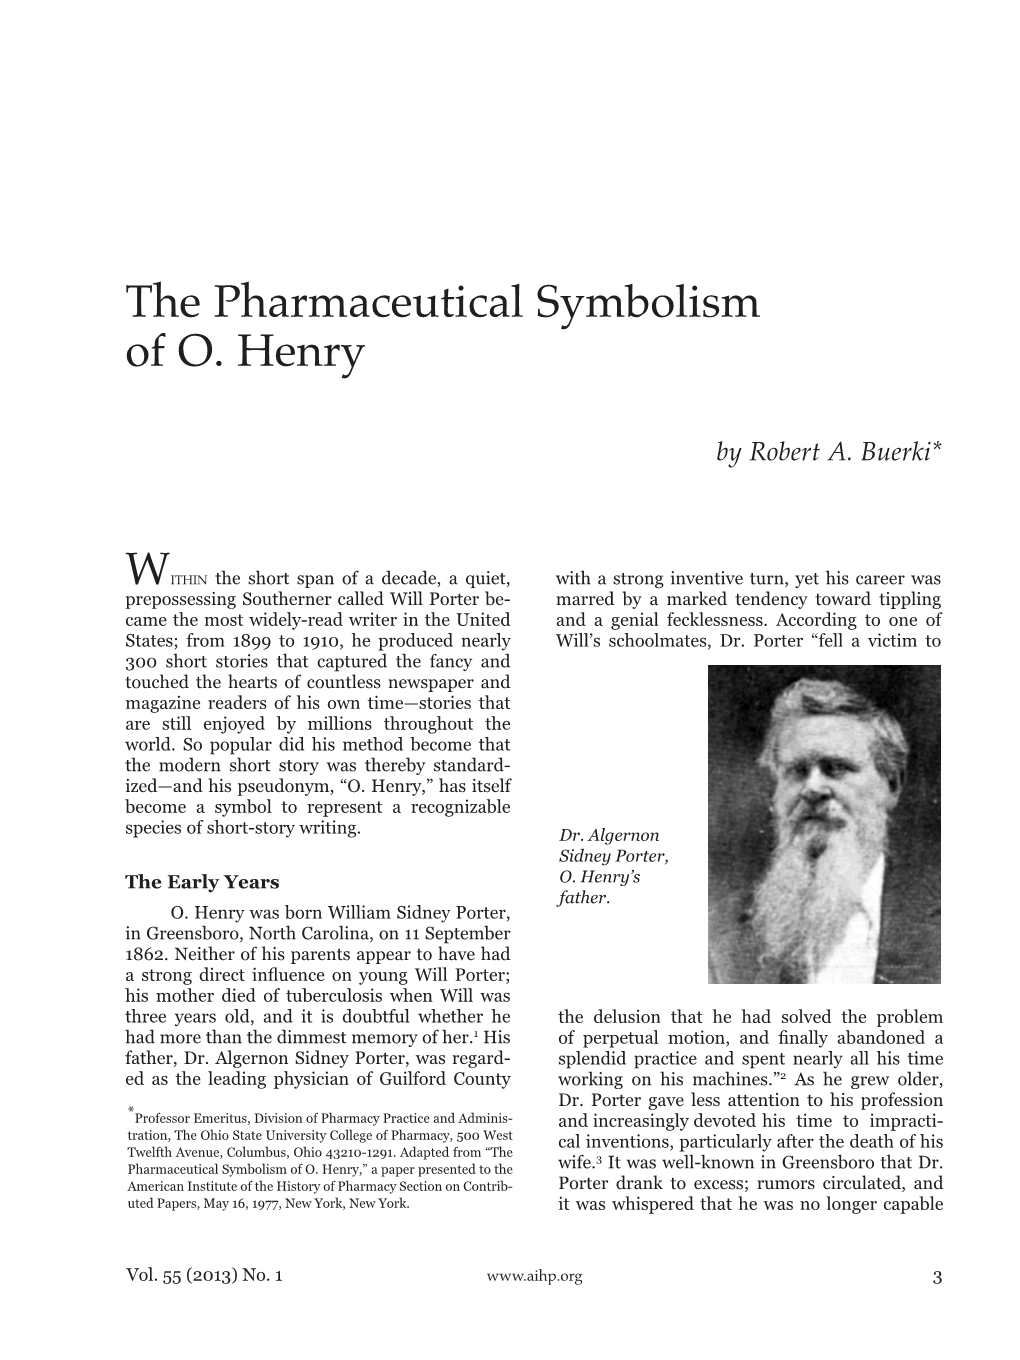 The Pharmaceutical Symbolism of O. Henry